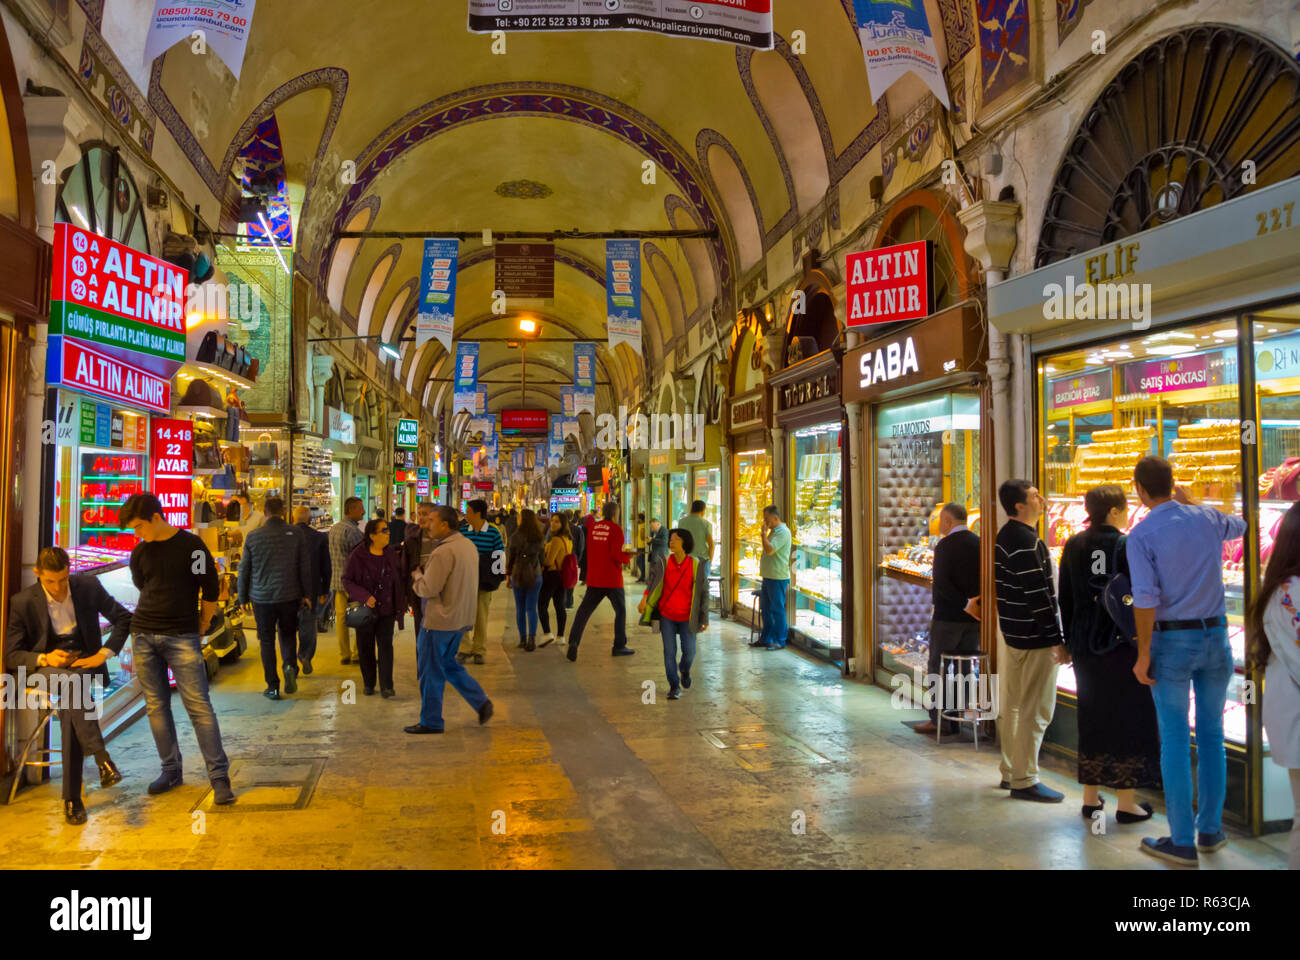 Kapali Carsi, Grand Bazar, Fatih, Istanbul, Turquie, en Eurasie Banque D'Images